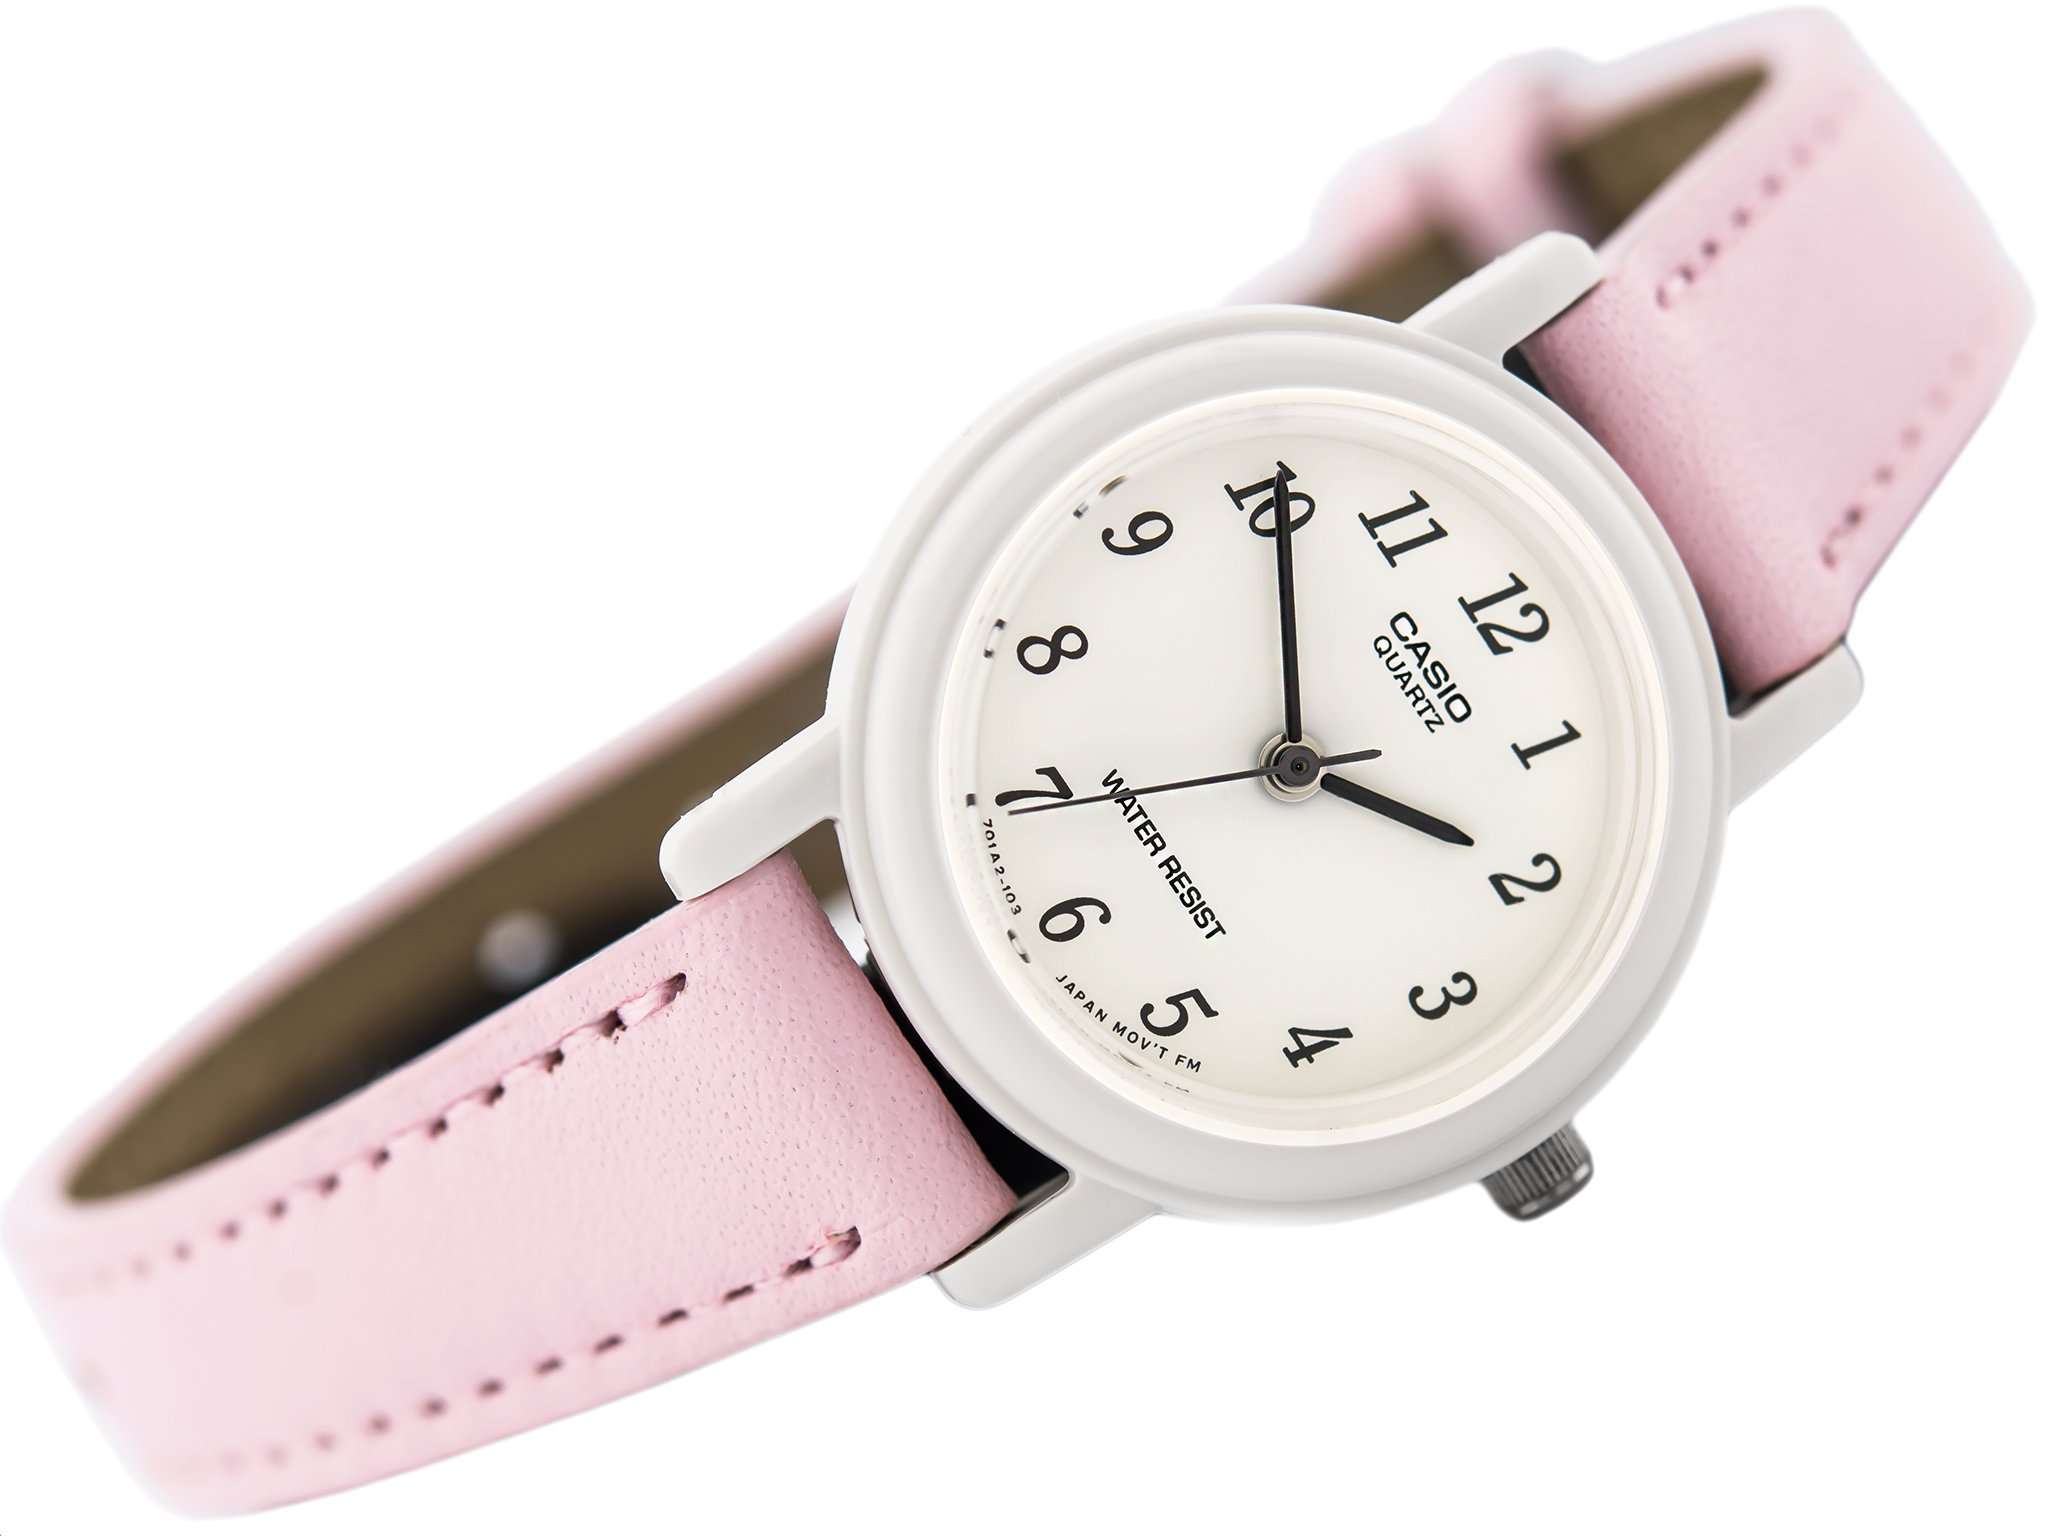 Casio LQ-139L-4B1 Pink Leather Strap Women's Watch-Watch Portal Philippines